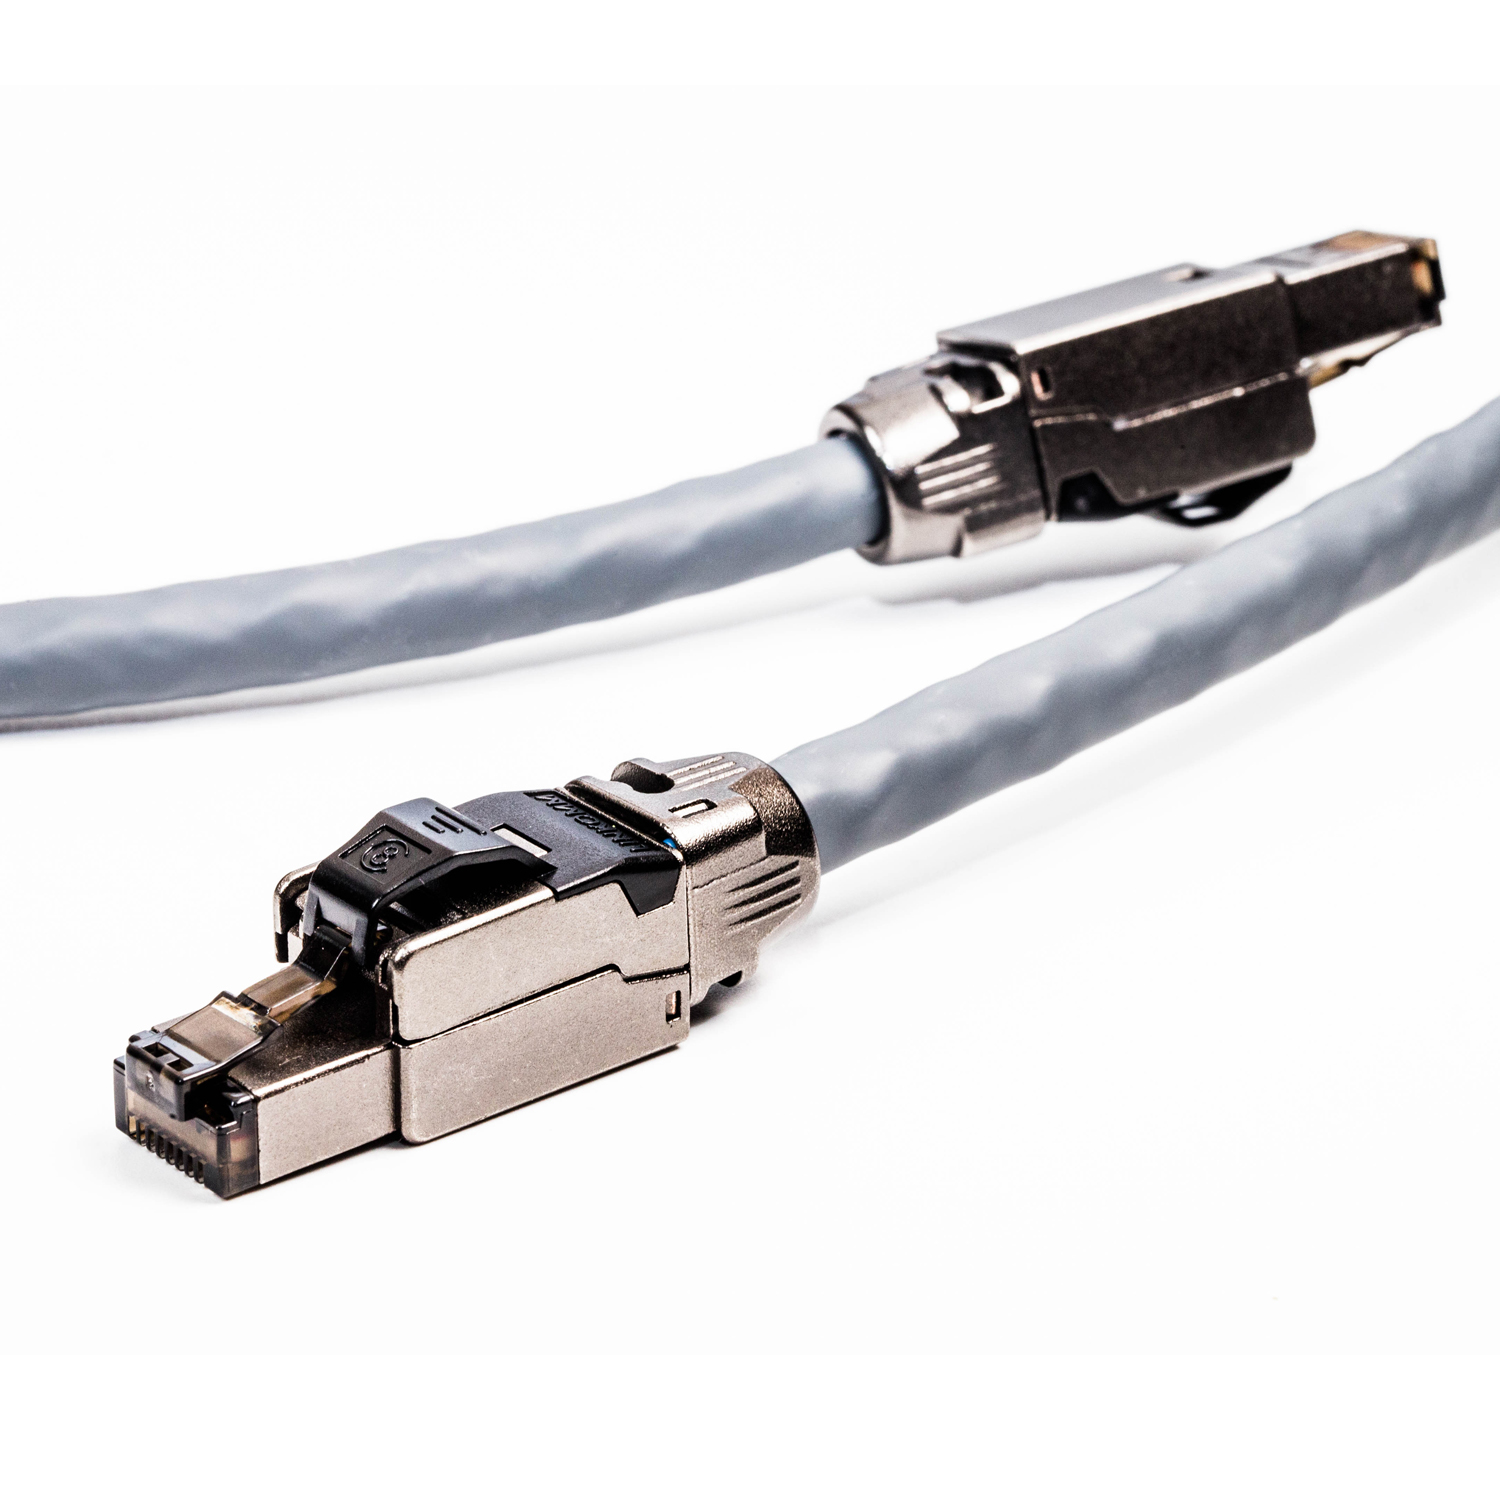 Cable de red sólido Cat.8 S/FTP de 22 AWG LSZH verificado GHMT 40G